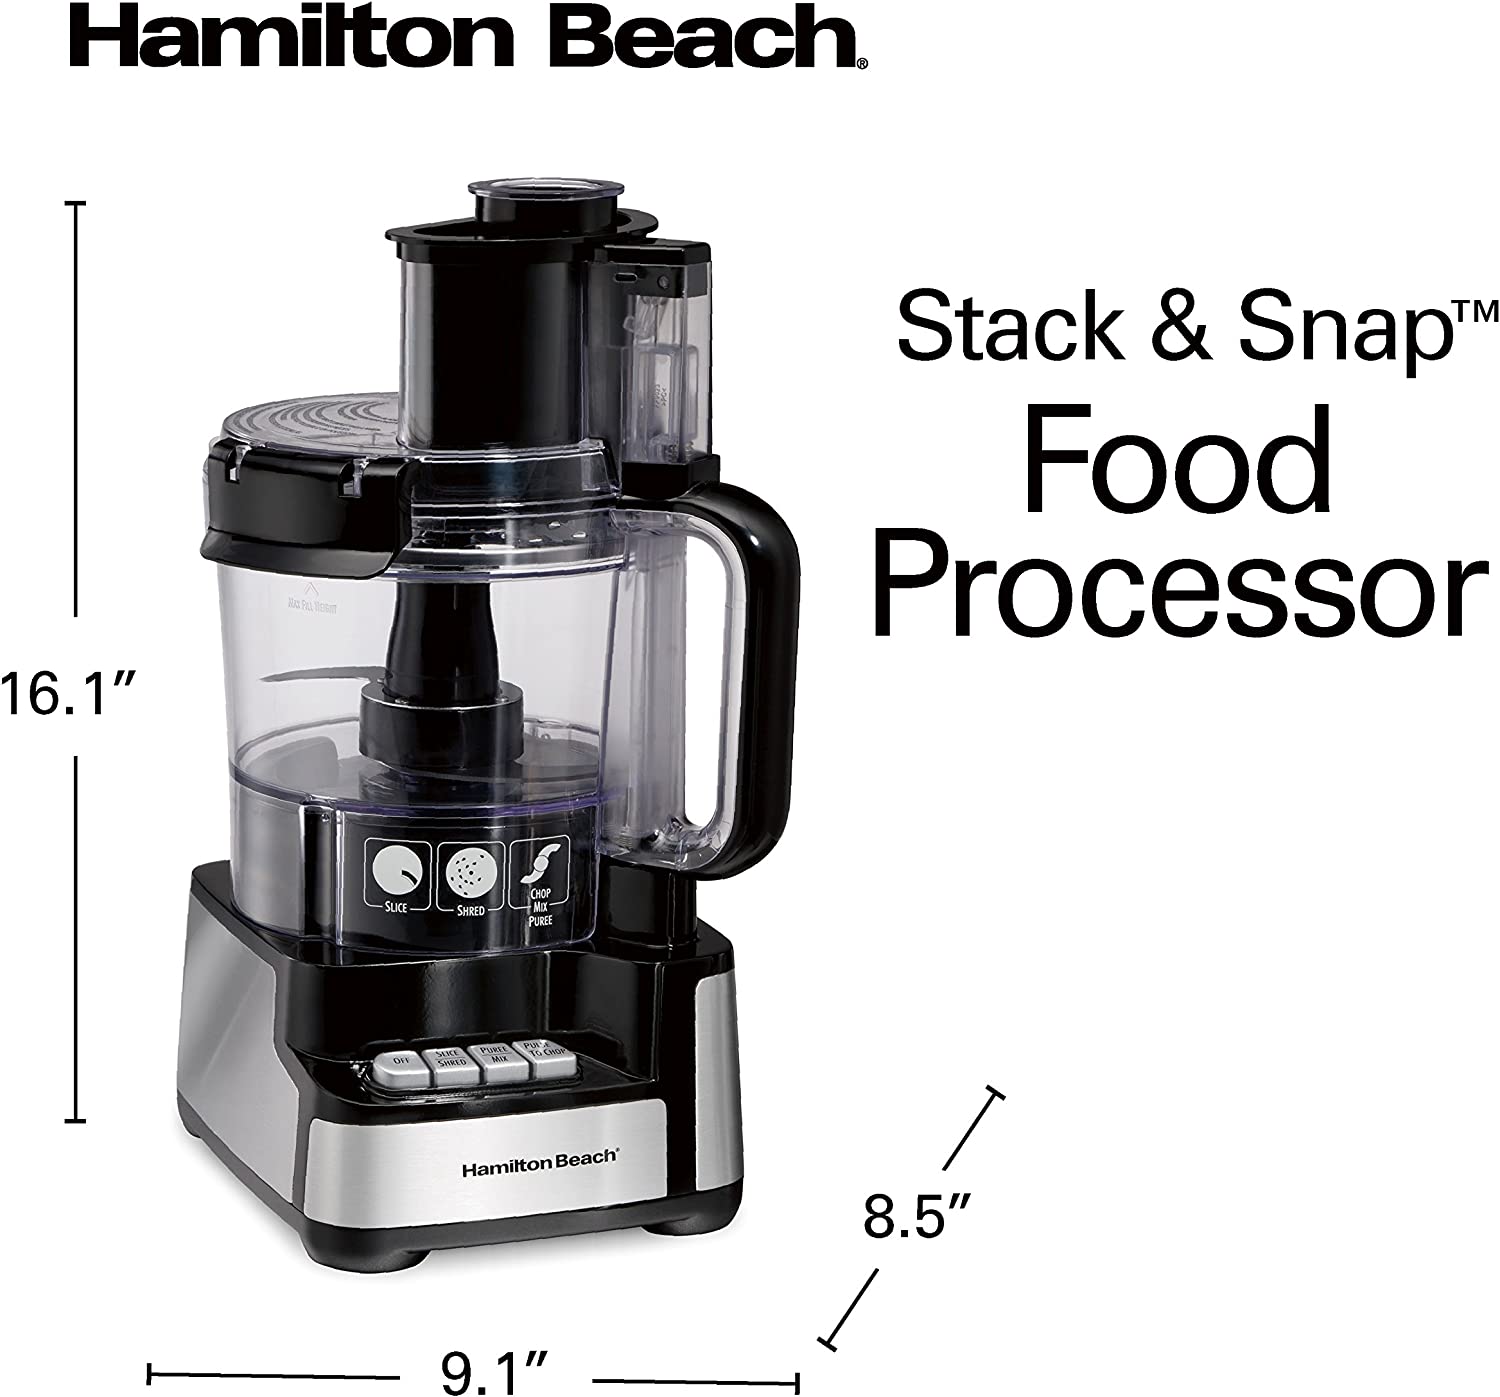 Hamilton Beach Professional Spiralizing Stack & Snap Food Processor